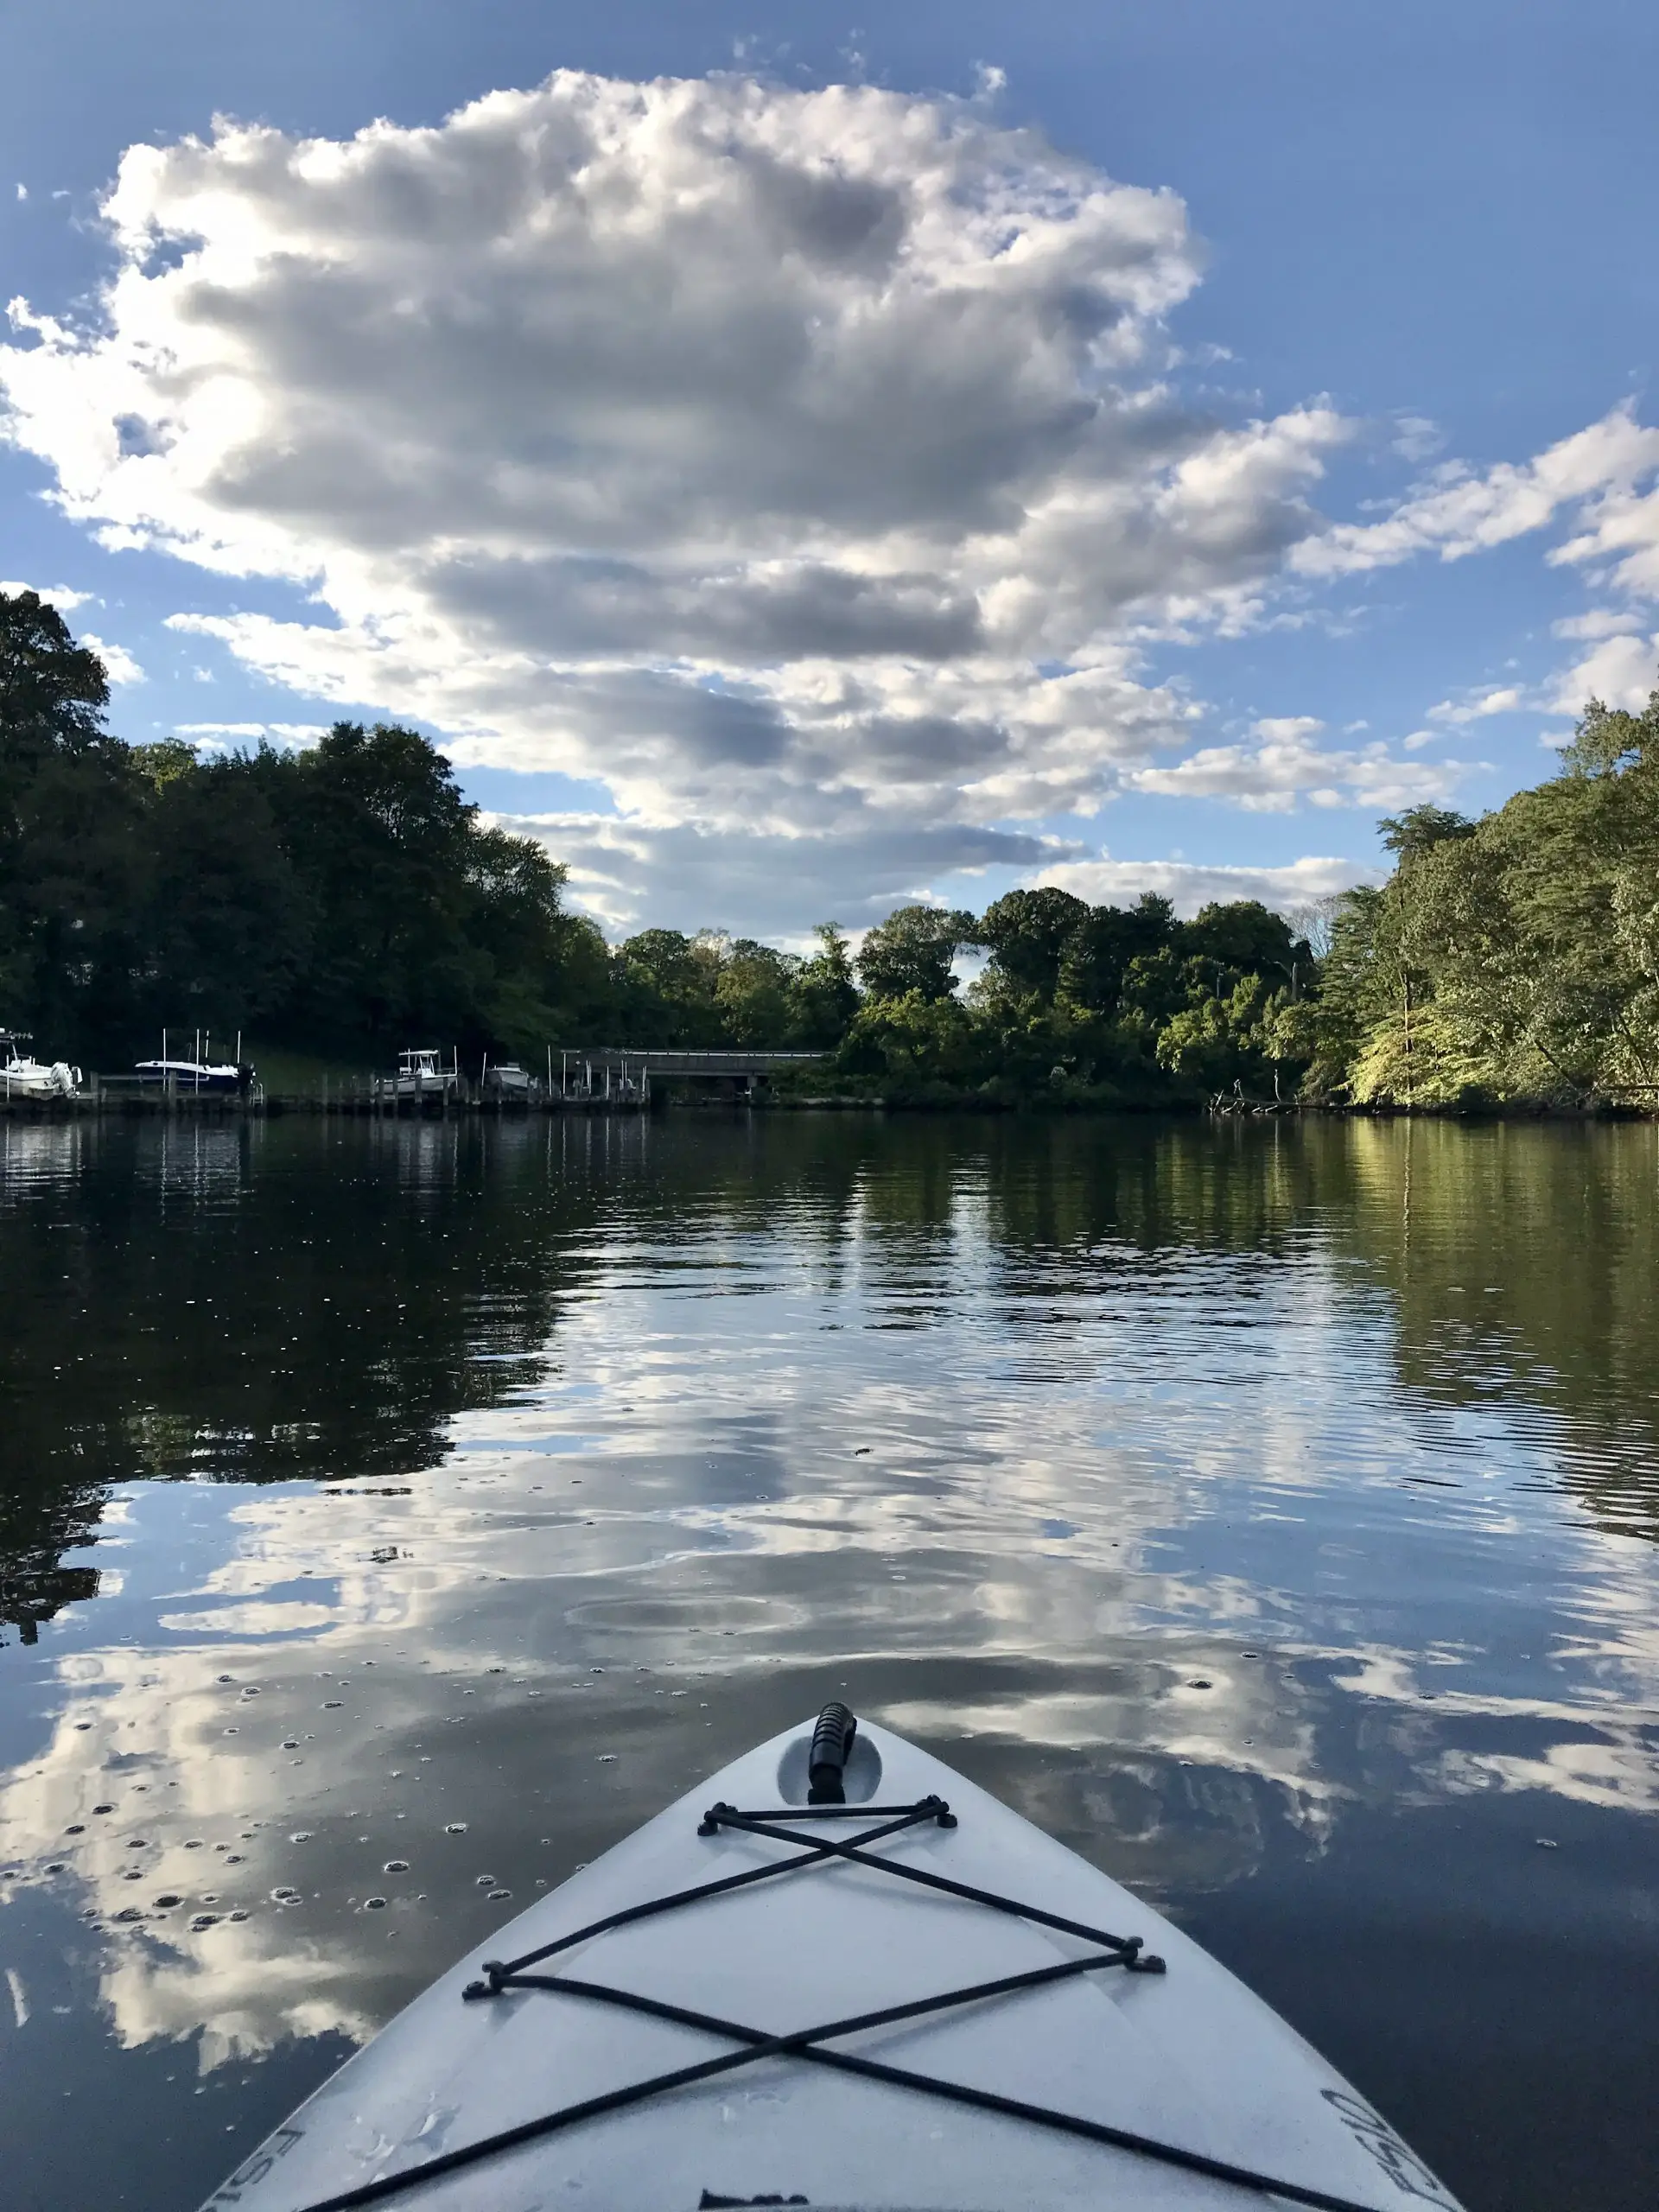 kayak tip on river with blue skies